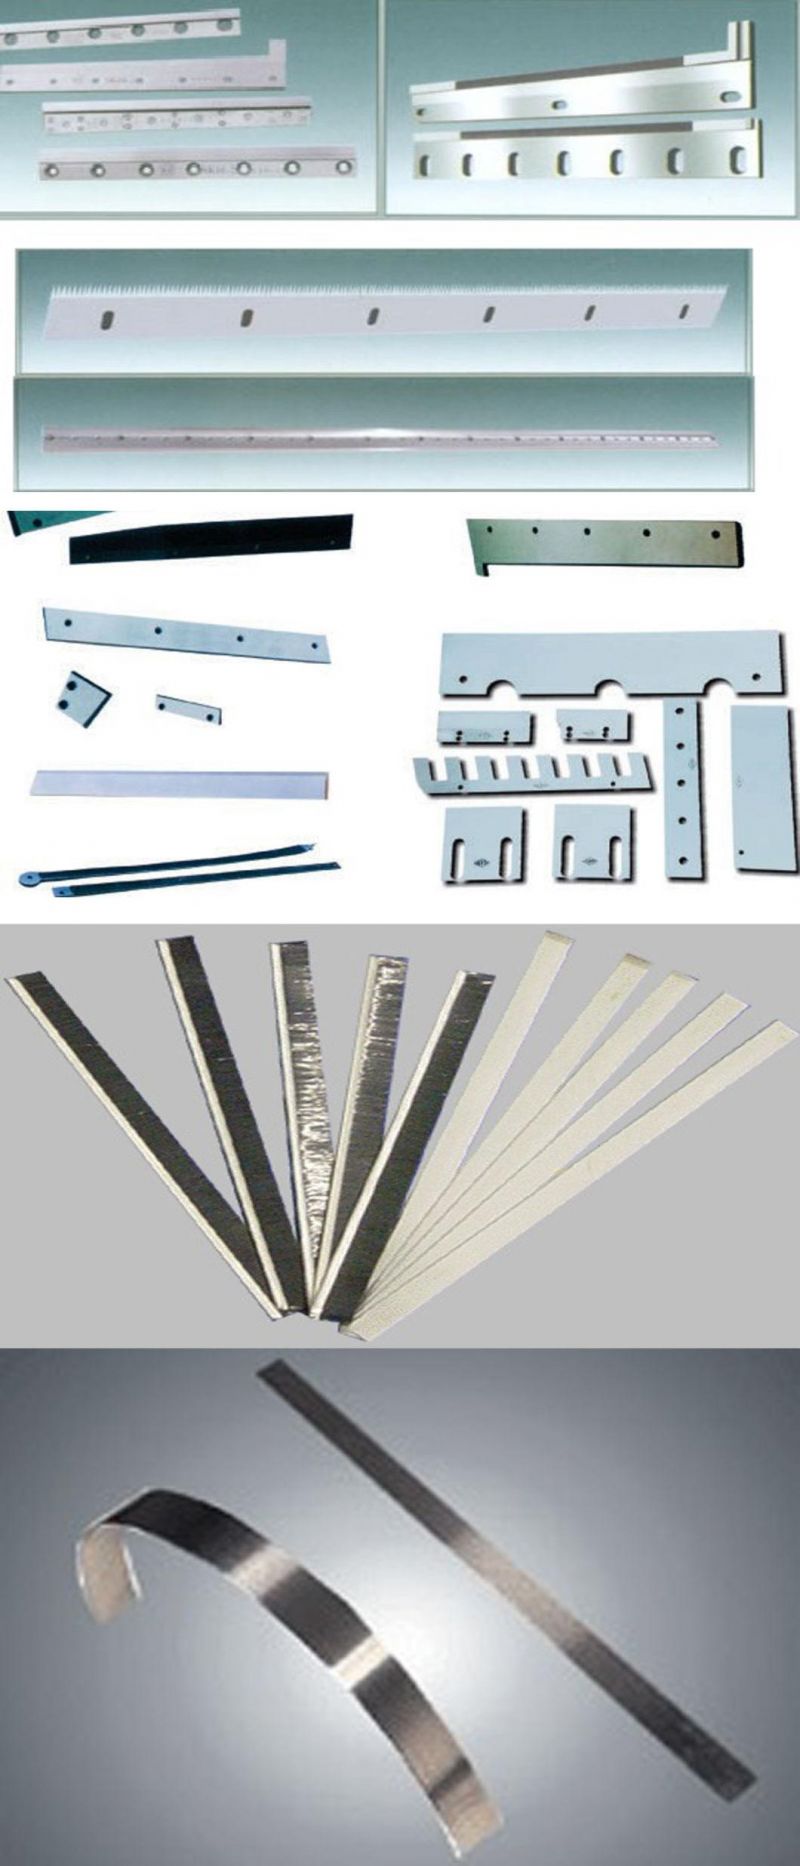 Wholesale Price Blades for Aluminum Foil Cutting